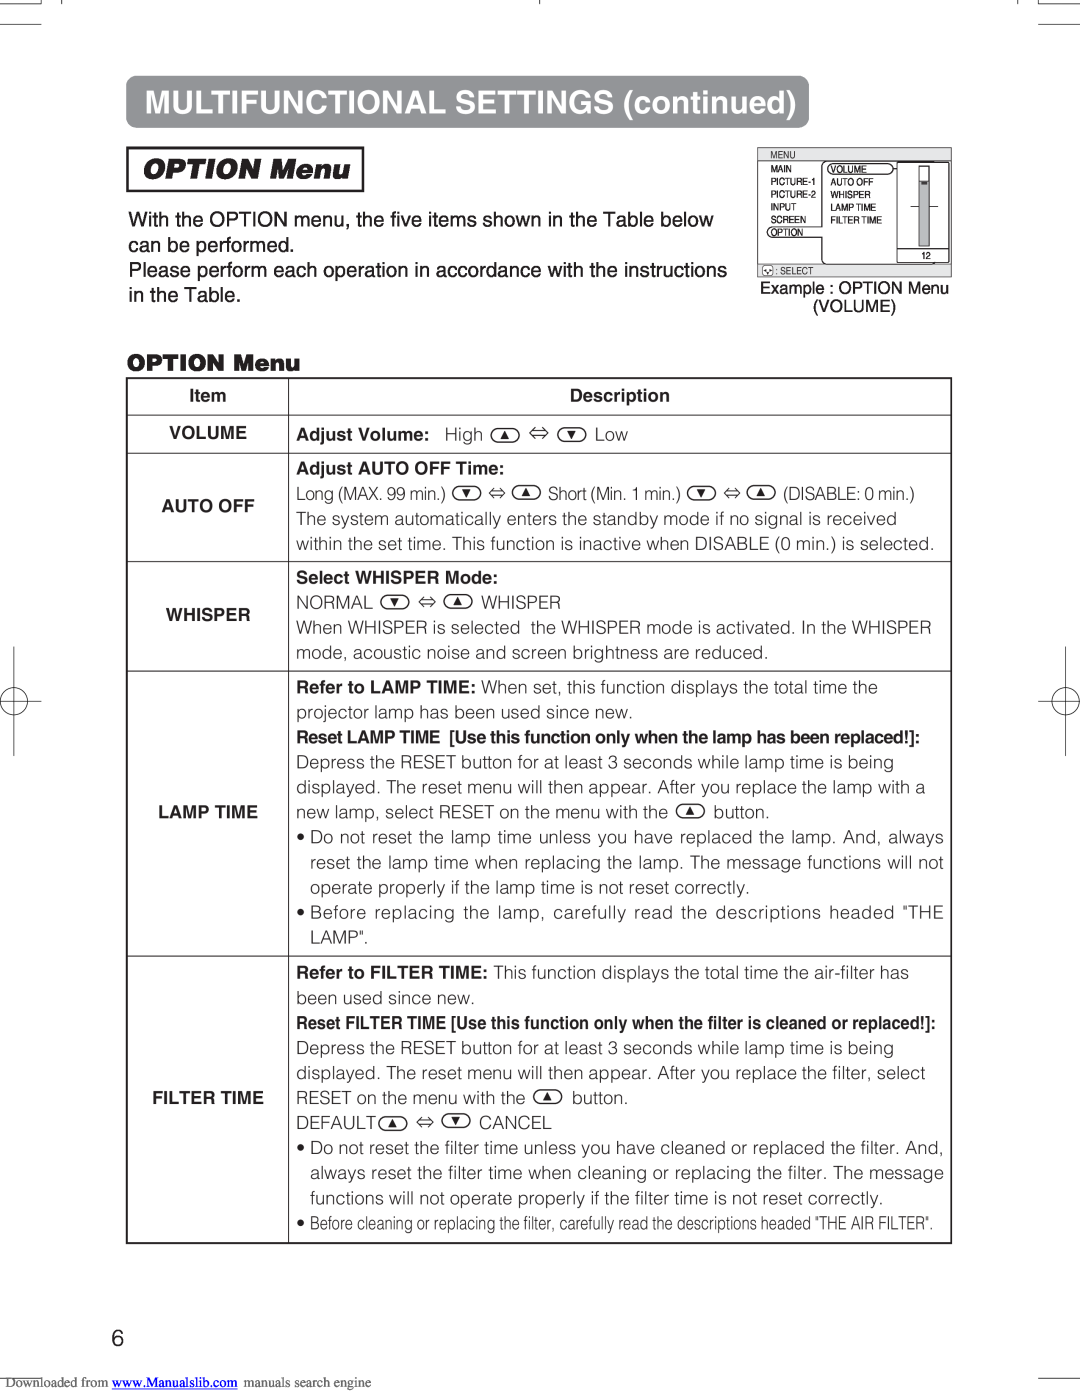 Hitachi CPX328W user manual OPTION Menu, MULTIFUNCTIONAL SETTINGS continued 